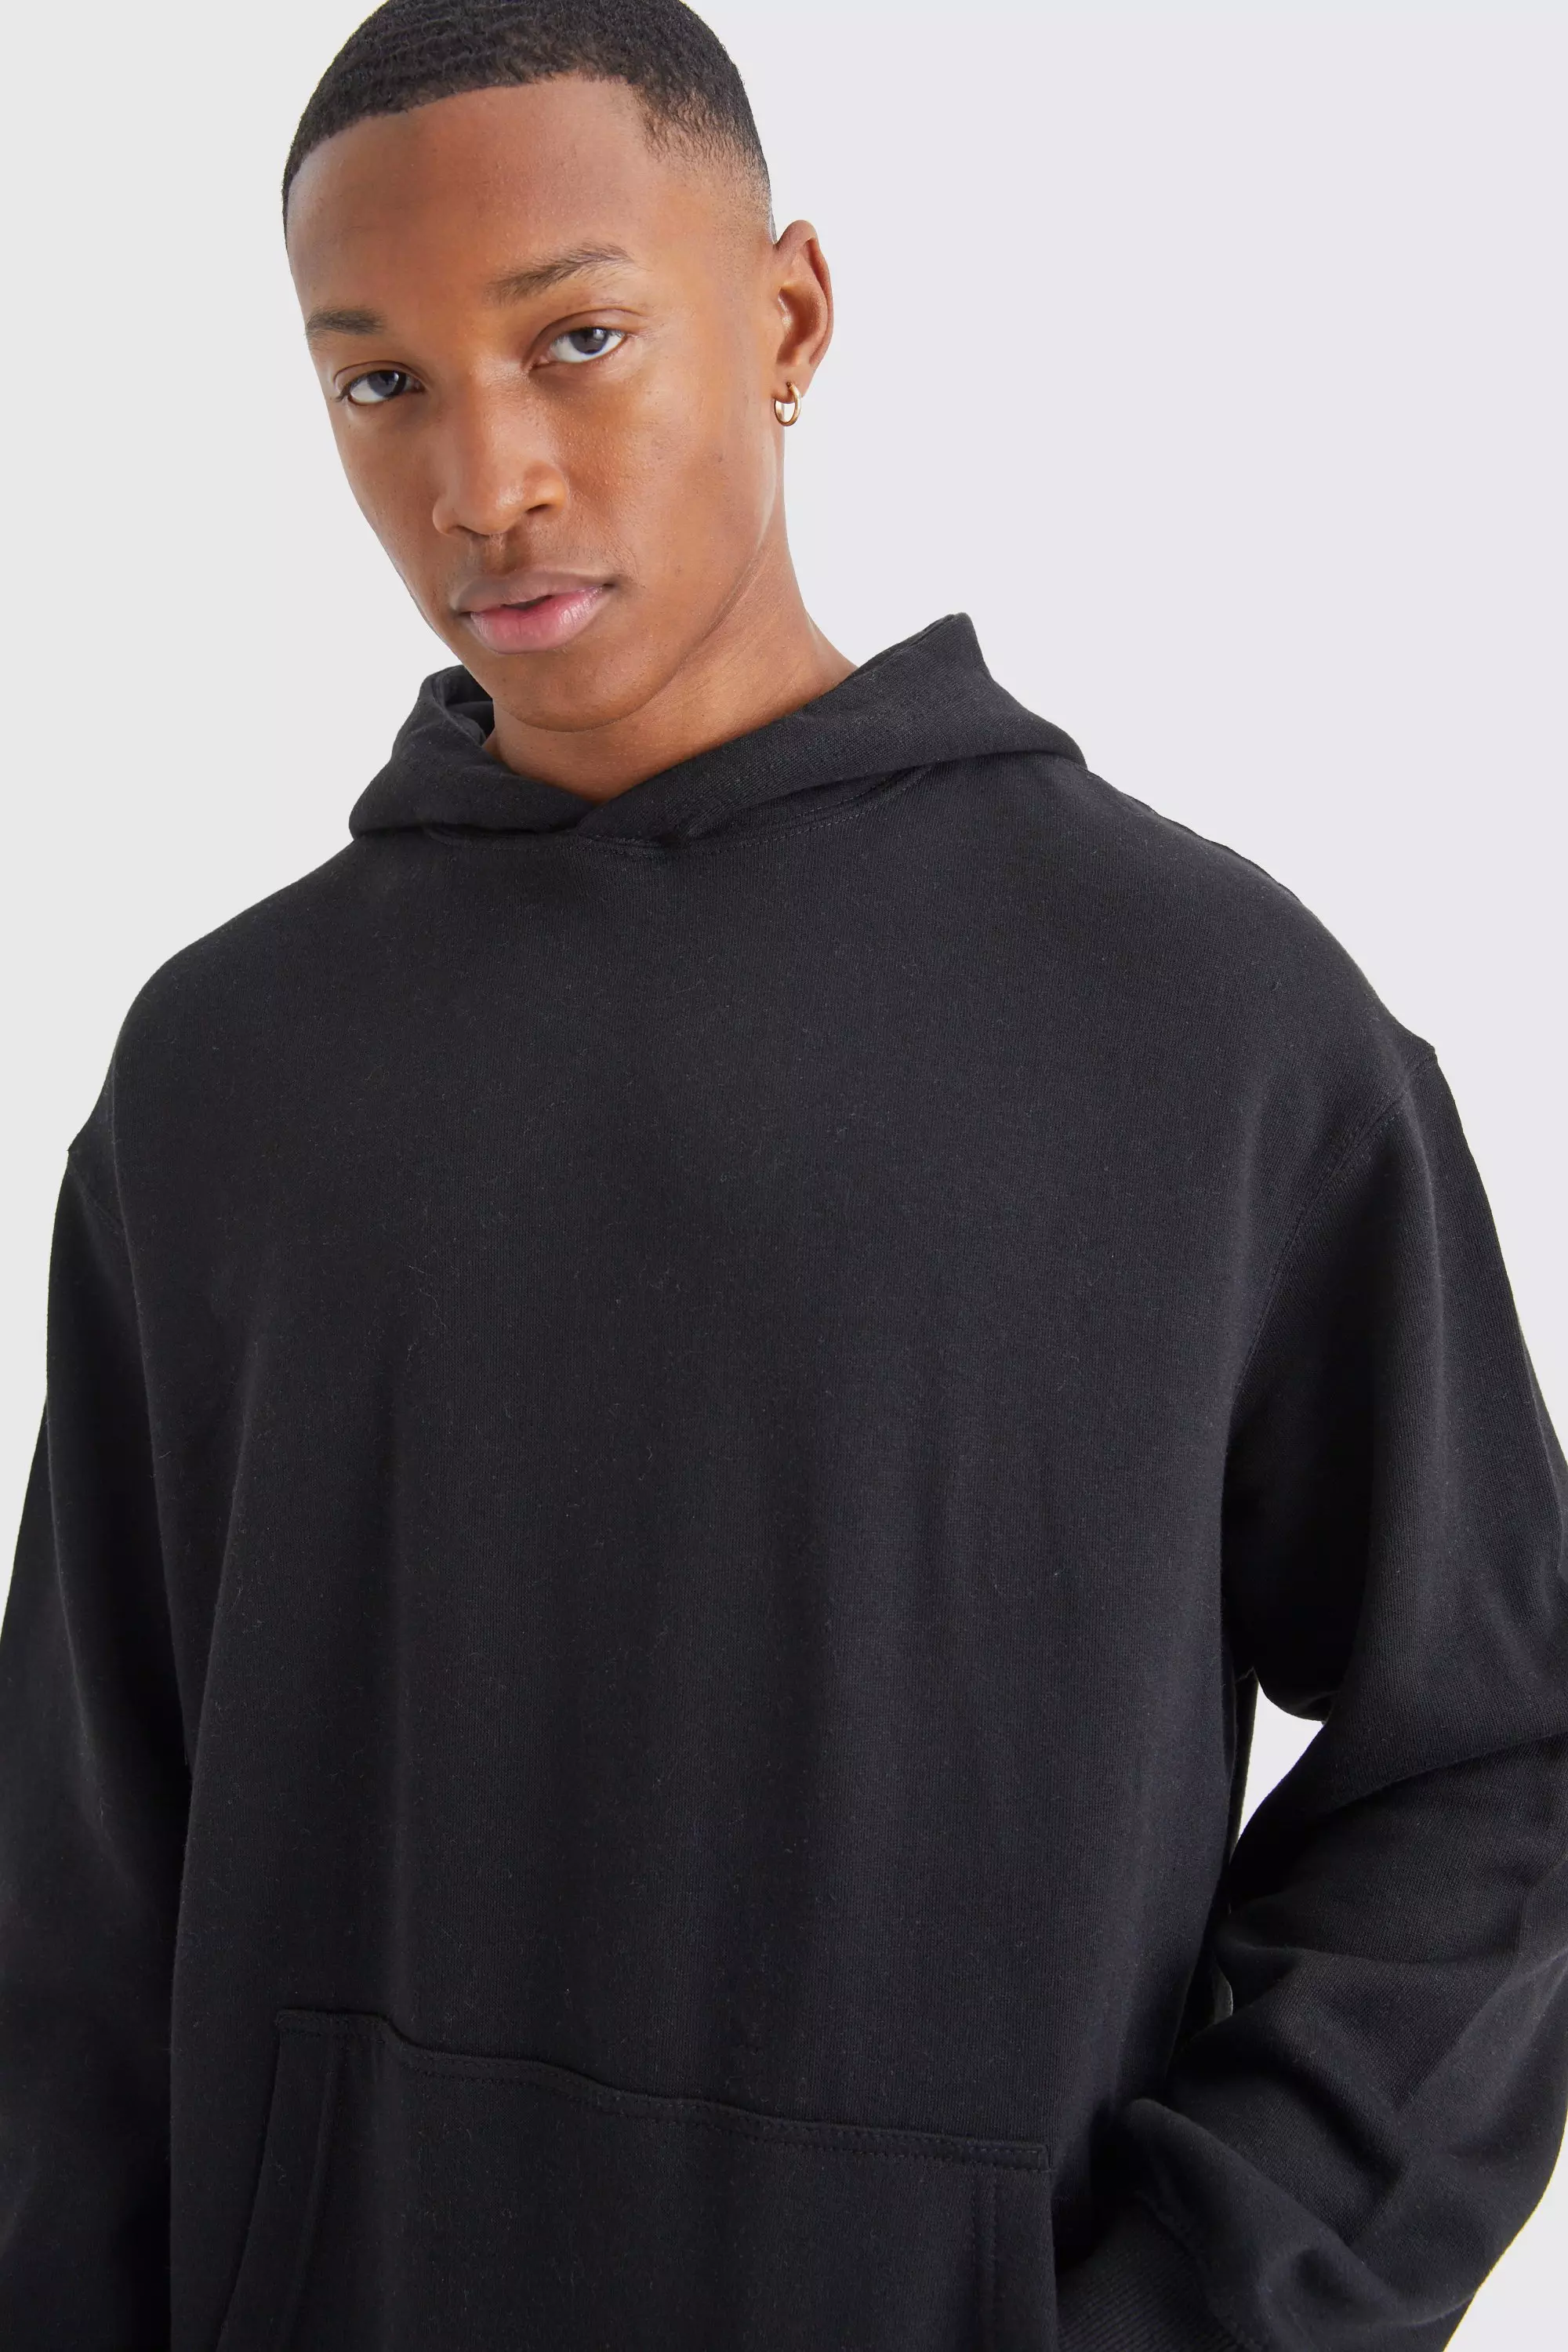 ANRABESS Oversized Hoodies for Women Fleece Pullover Teen Girls